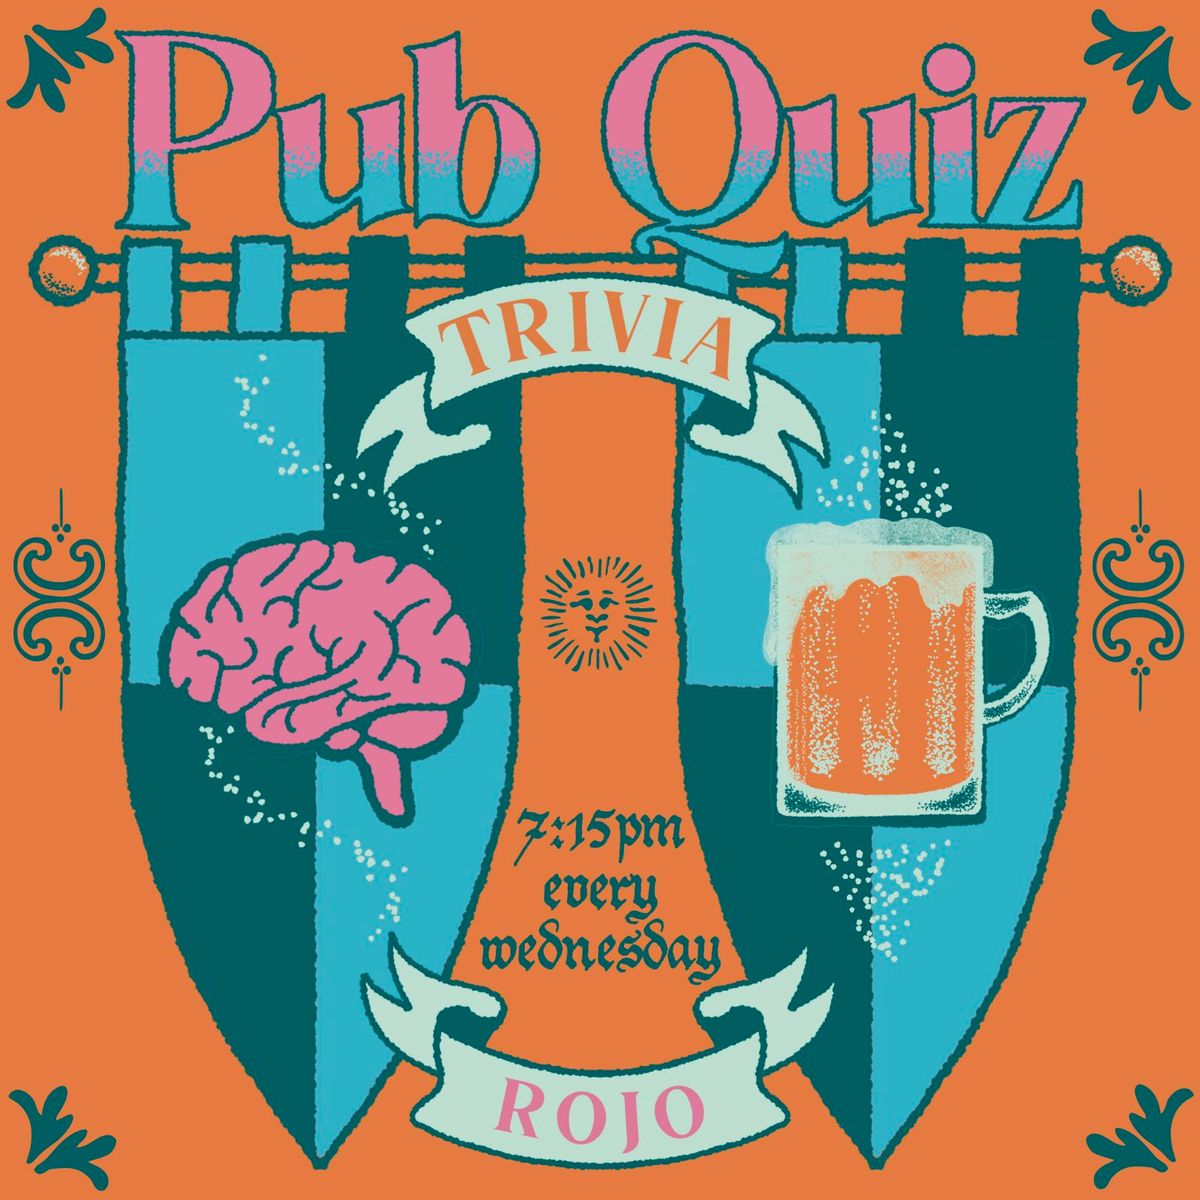 Pub Quiz Trivia Every Wednesday at Rojo